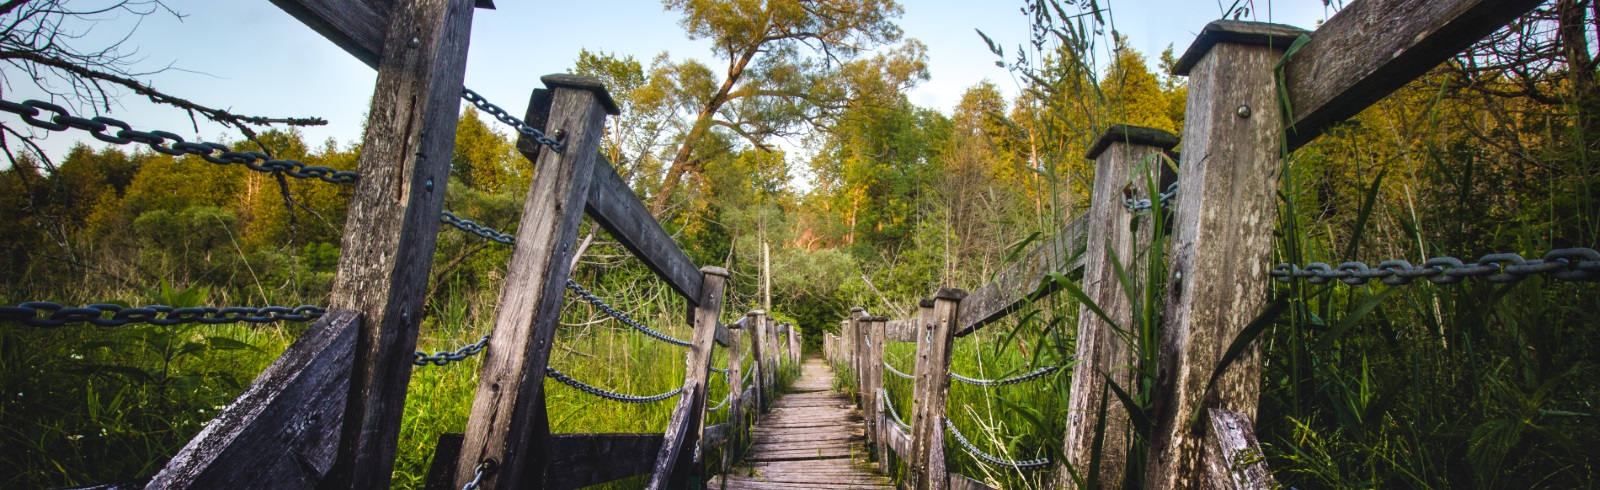 bridge trail to forest